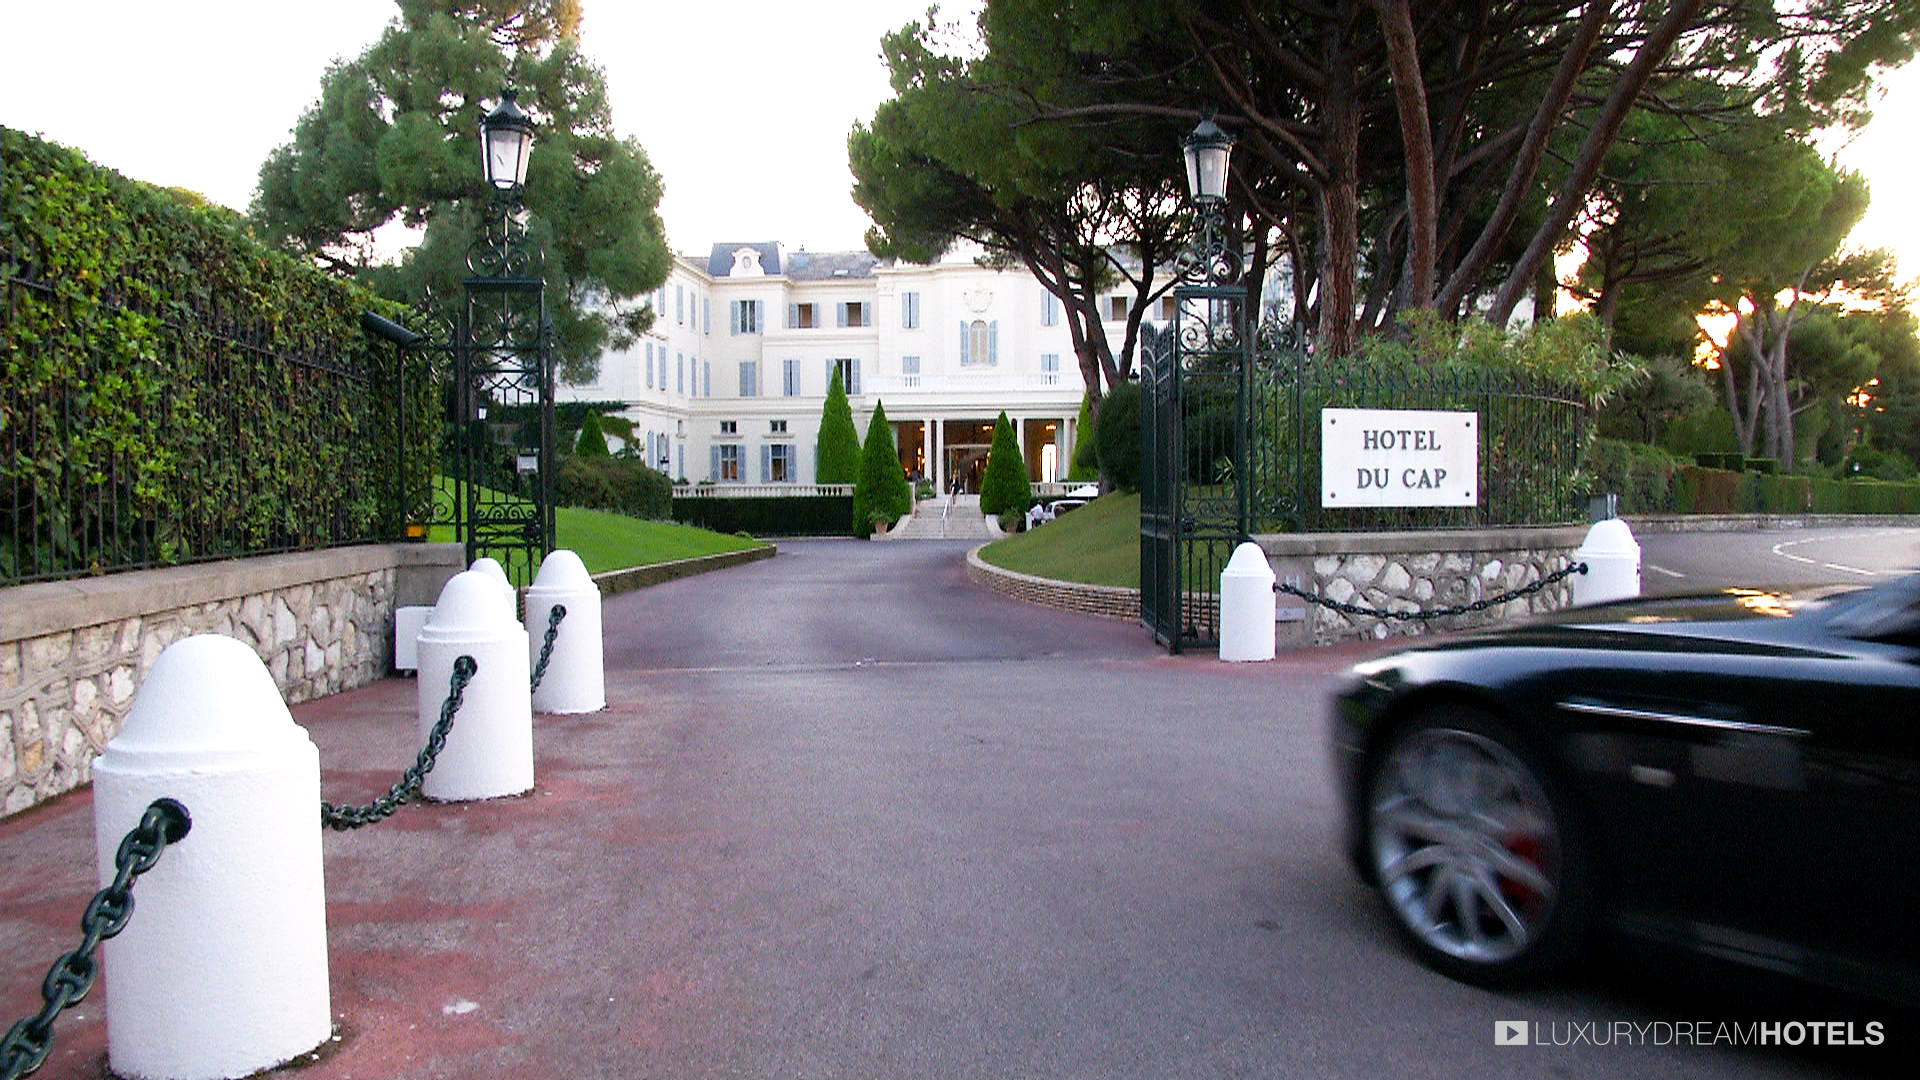 Delegation Picasso udvikling Luxury hotel, Hotel du Cap-Eden-Roc, Cap d'Antibe, France - Luxury Dream  Hotels